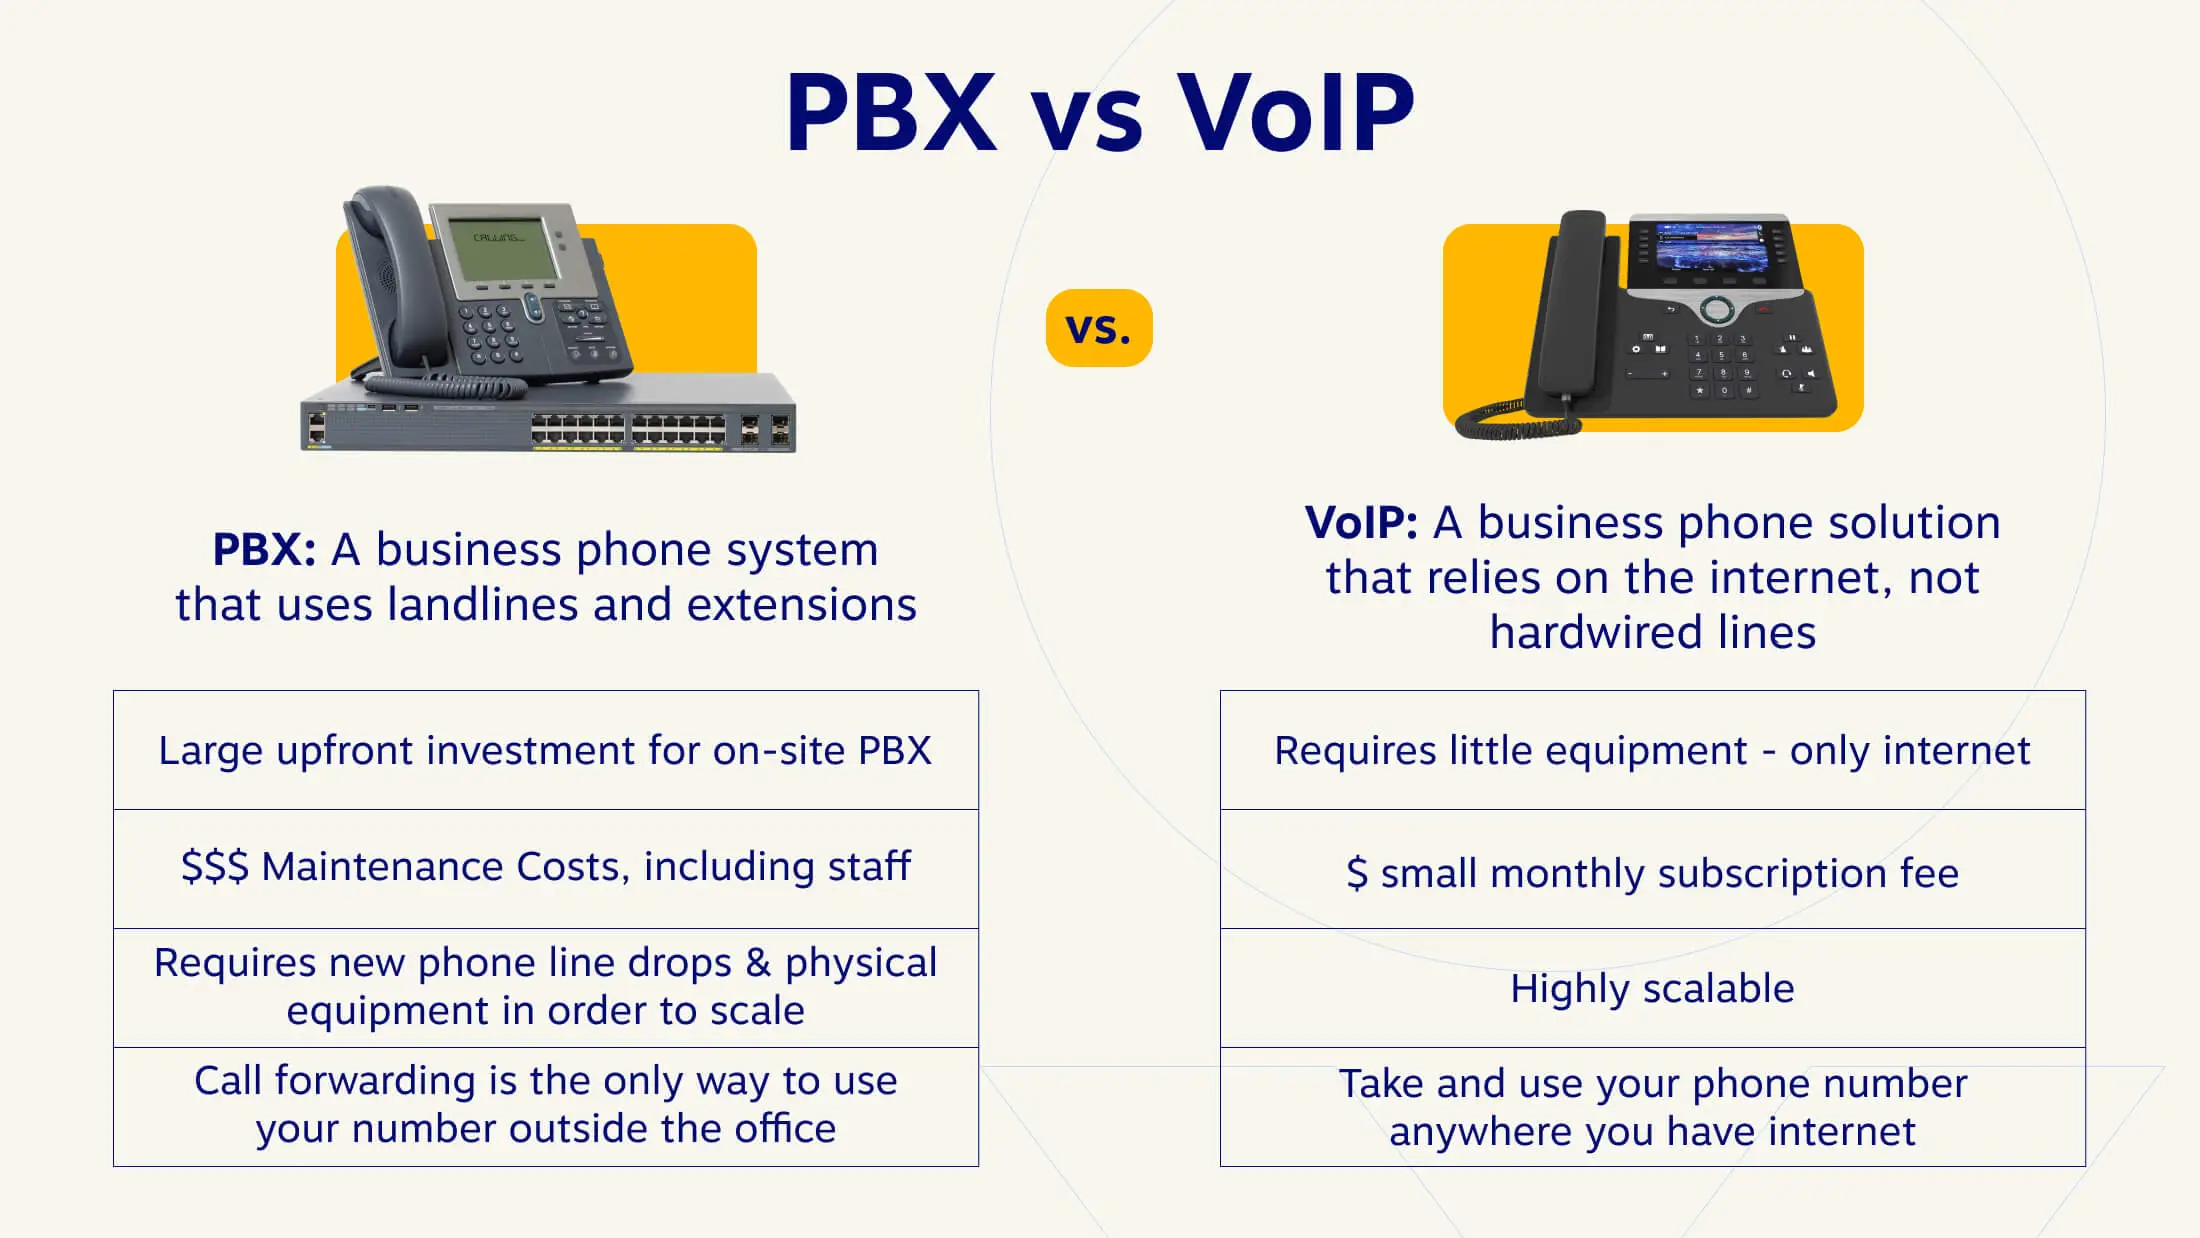 PBX VoIP 유선 전화 및 내선 전화를 사용하는 비즈니스 전화 시스템 유선 회선이 아닌 인터넷에 의존하는 비즈니스 전화 솔루션 현장 PBX에 대한 대규모 초기 투자 적은 장비 필요 - 인터넷만 필요 $$$ 직원을 포함한 유지 관리 비용 $ 소액 월 가입 수수료 확장을 위해서는 새로운 전화 회선 및 물리적 장비가 필요합니다. 확장성이 뛰어납니다. 착신 전환은 사무실 밖에서 전화번호를 사용할 수 있는 유일한 방법입니다. 인터넷이 있는 곳이면 어디에서나 전화번호를 받아 사용할 수 있습니다.